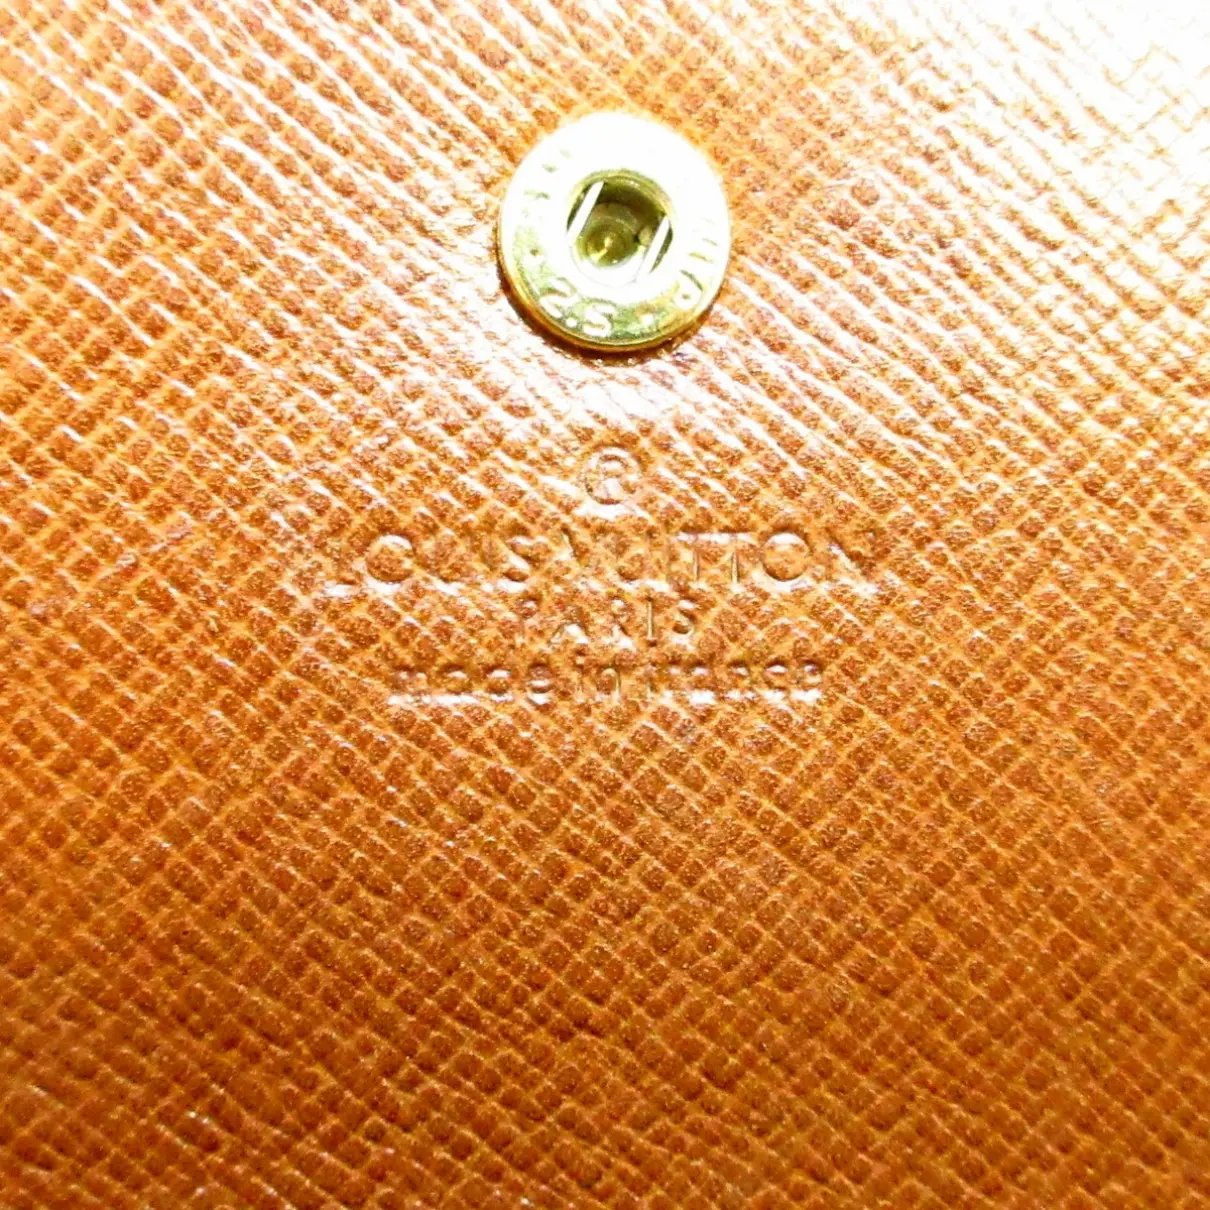 Wallet Louis Vuitton